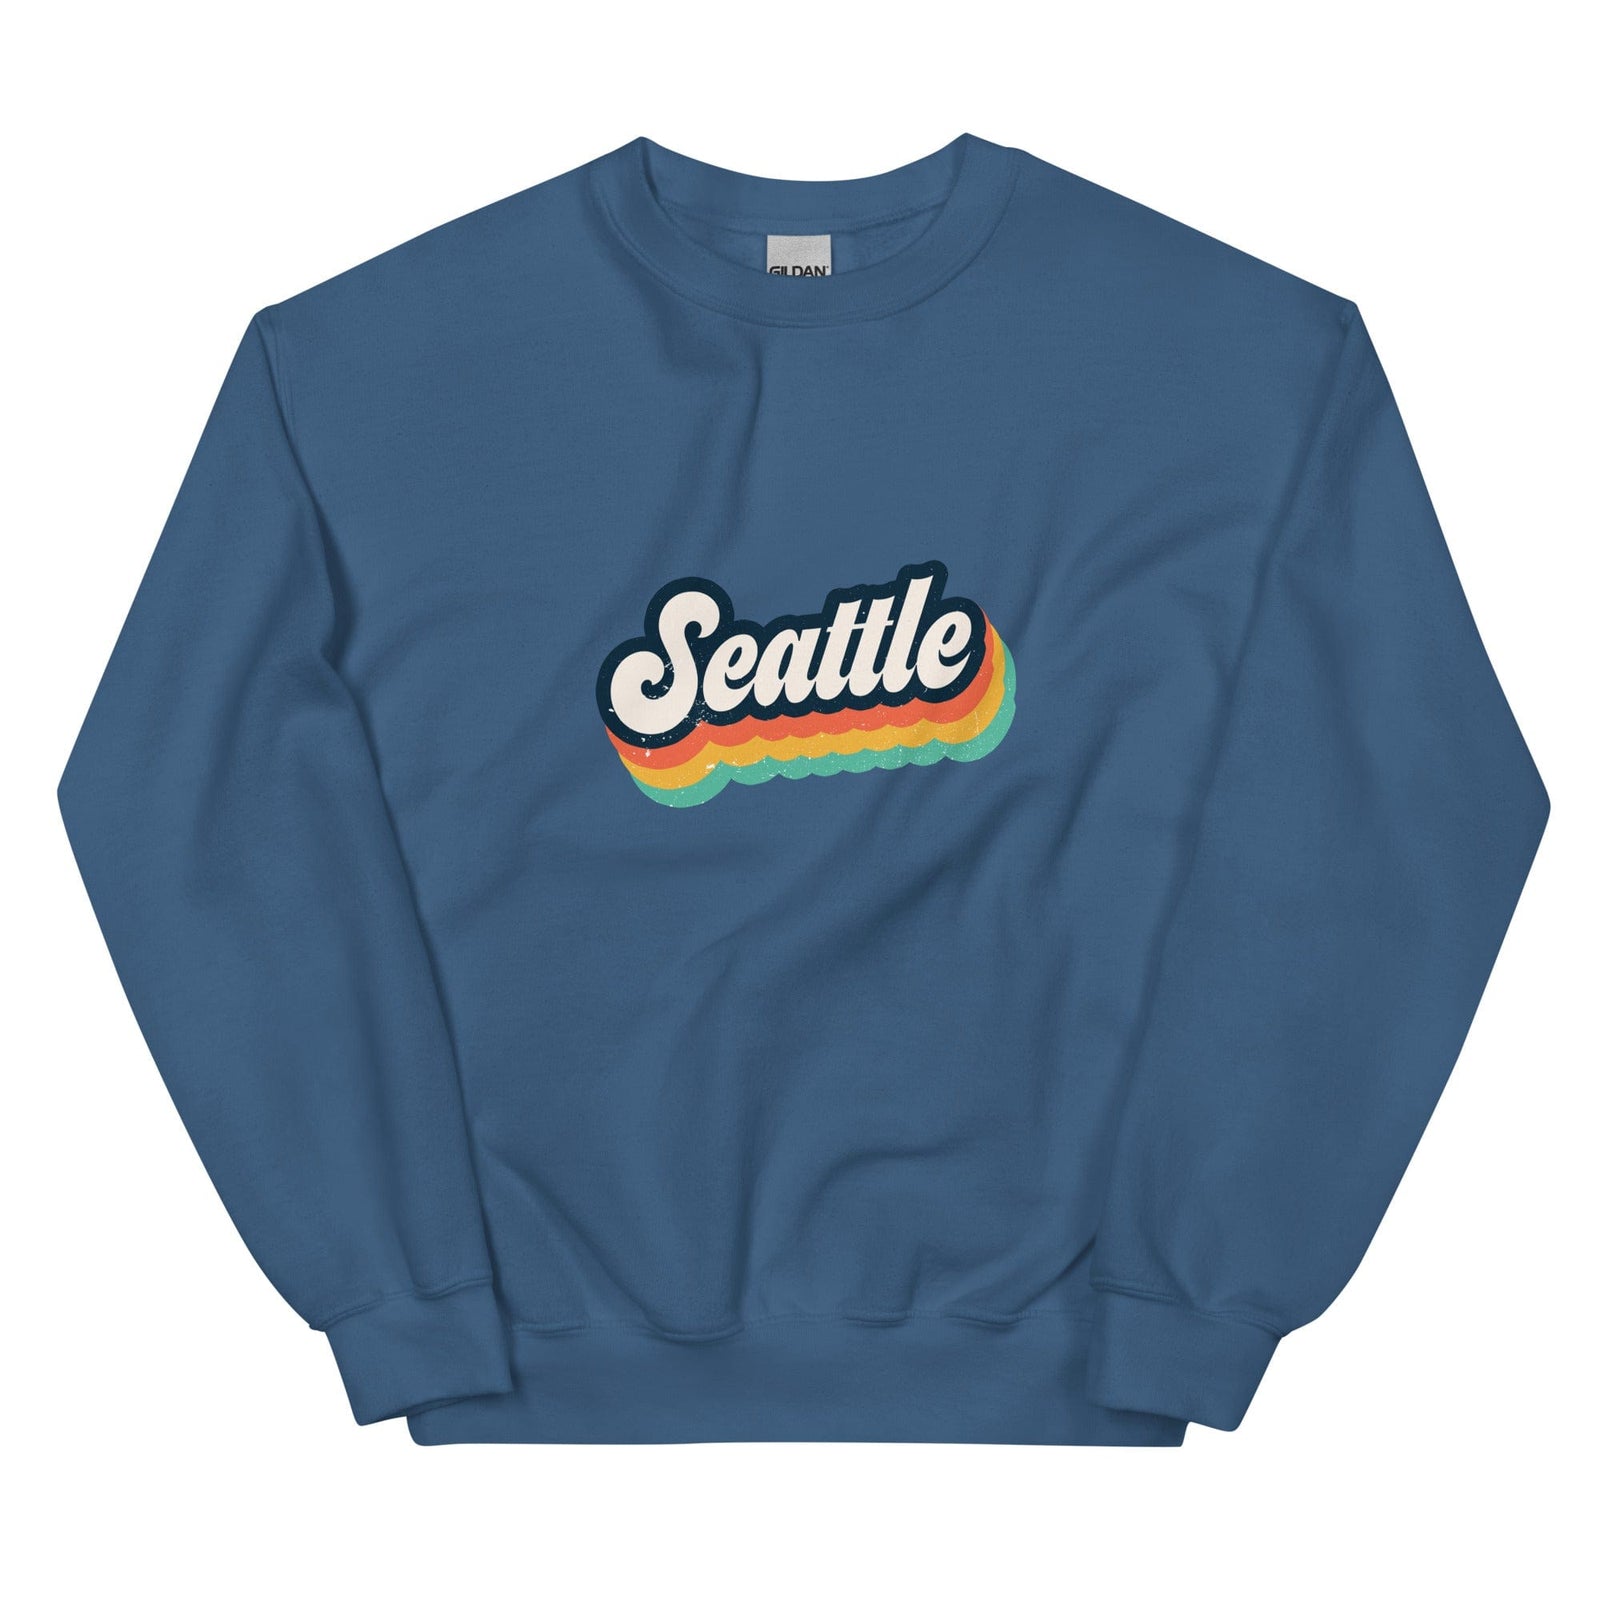 City Shirt Co Seattle Retro Crewneck Sweatshirt Indigo Blue / S